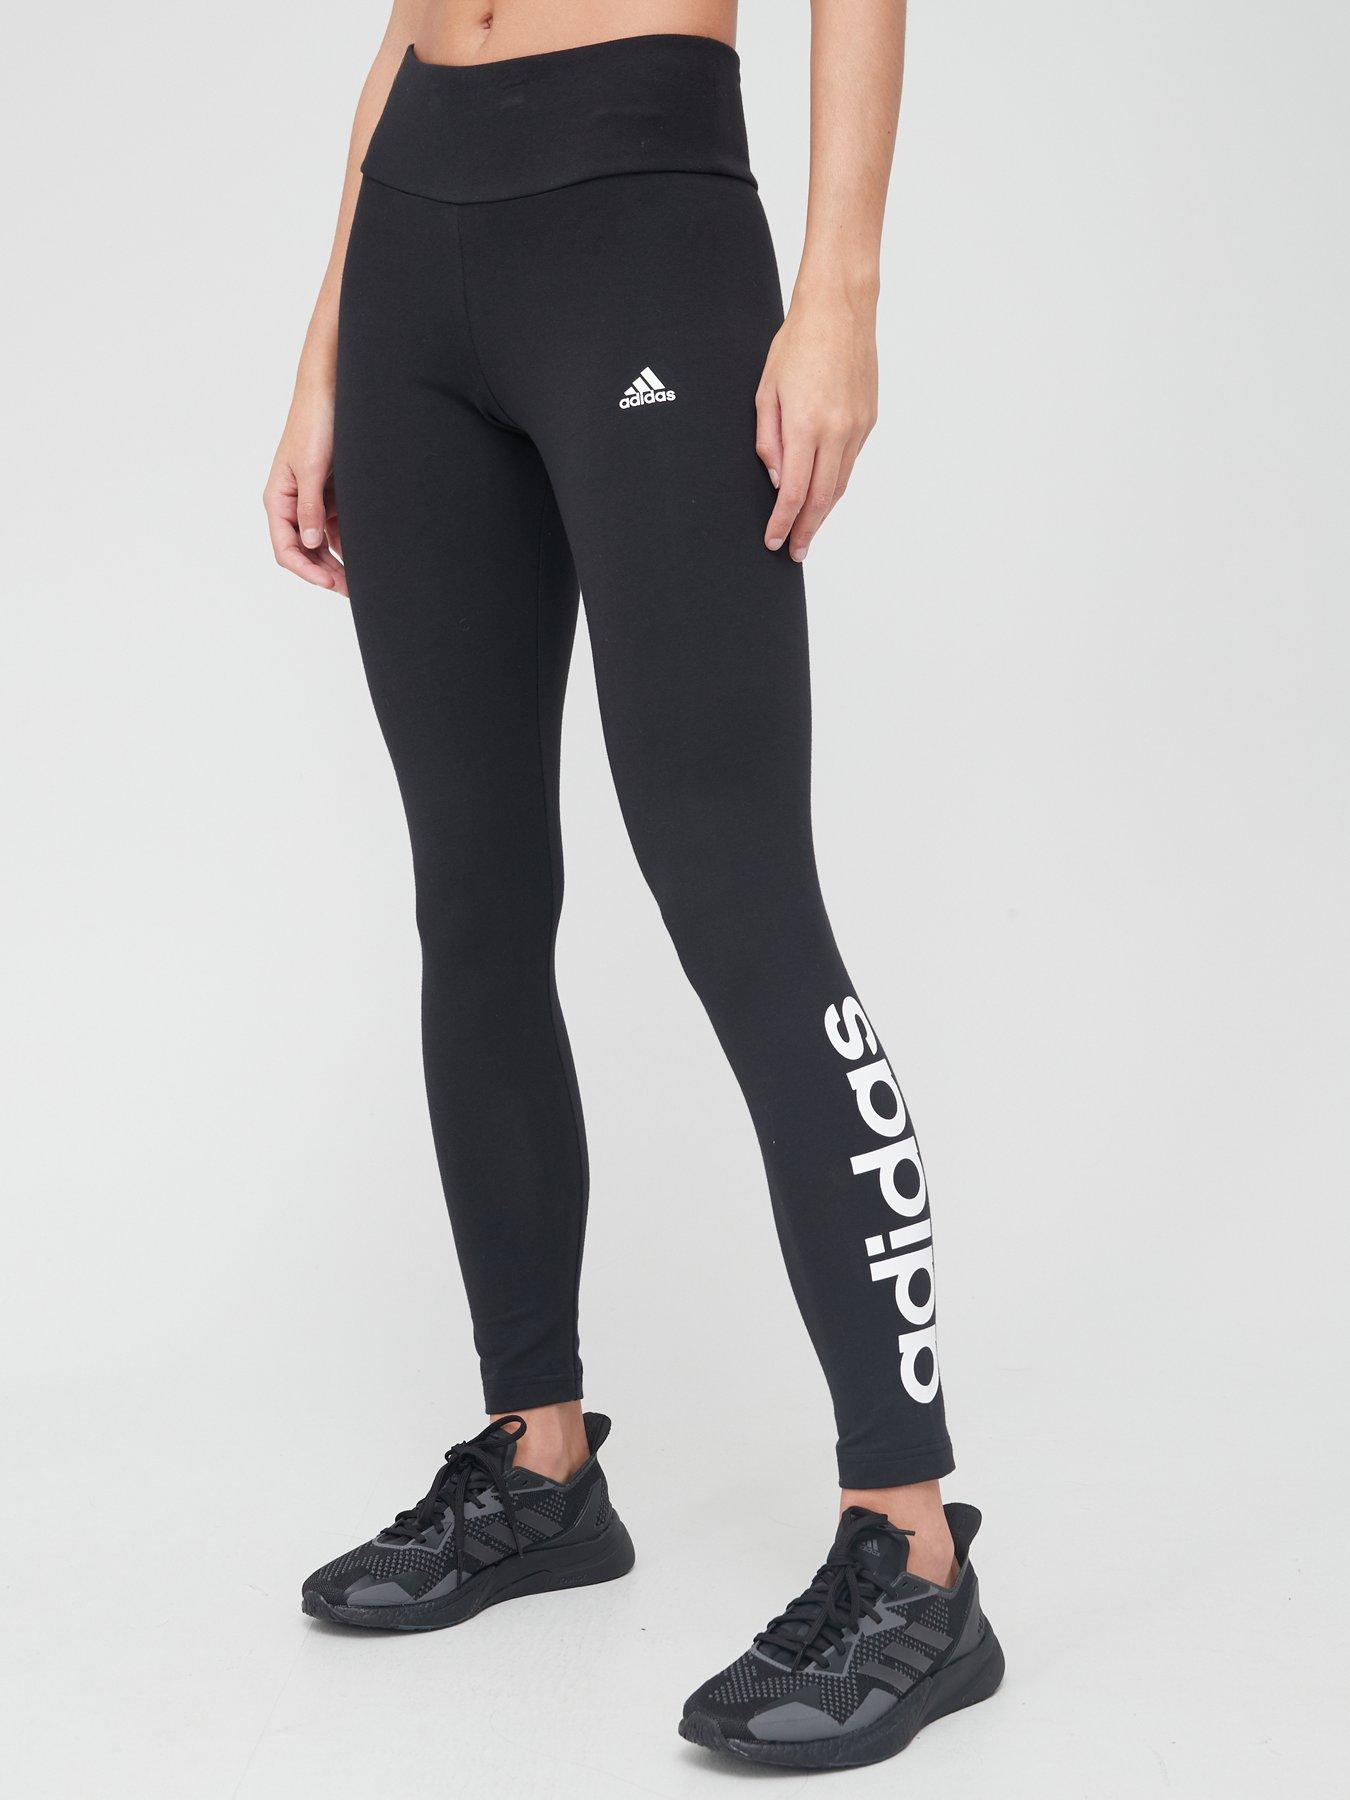 Adidas 3 Stripe 3/4 Leggings Bottoms Climalite Ladies Gym Sport Black UK 6  8 10